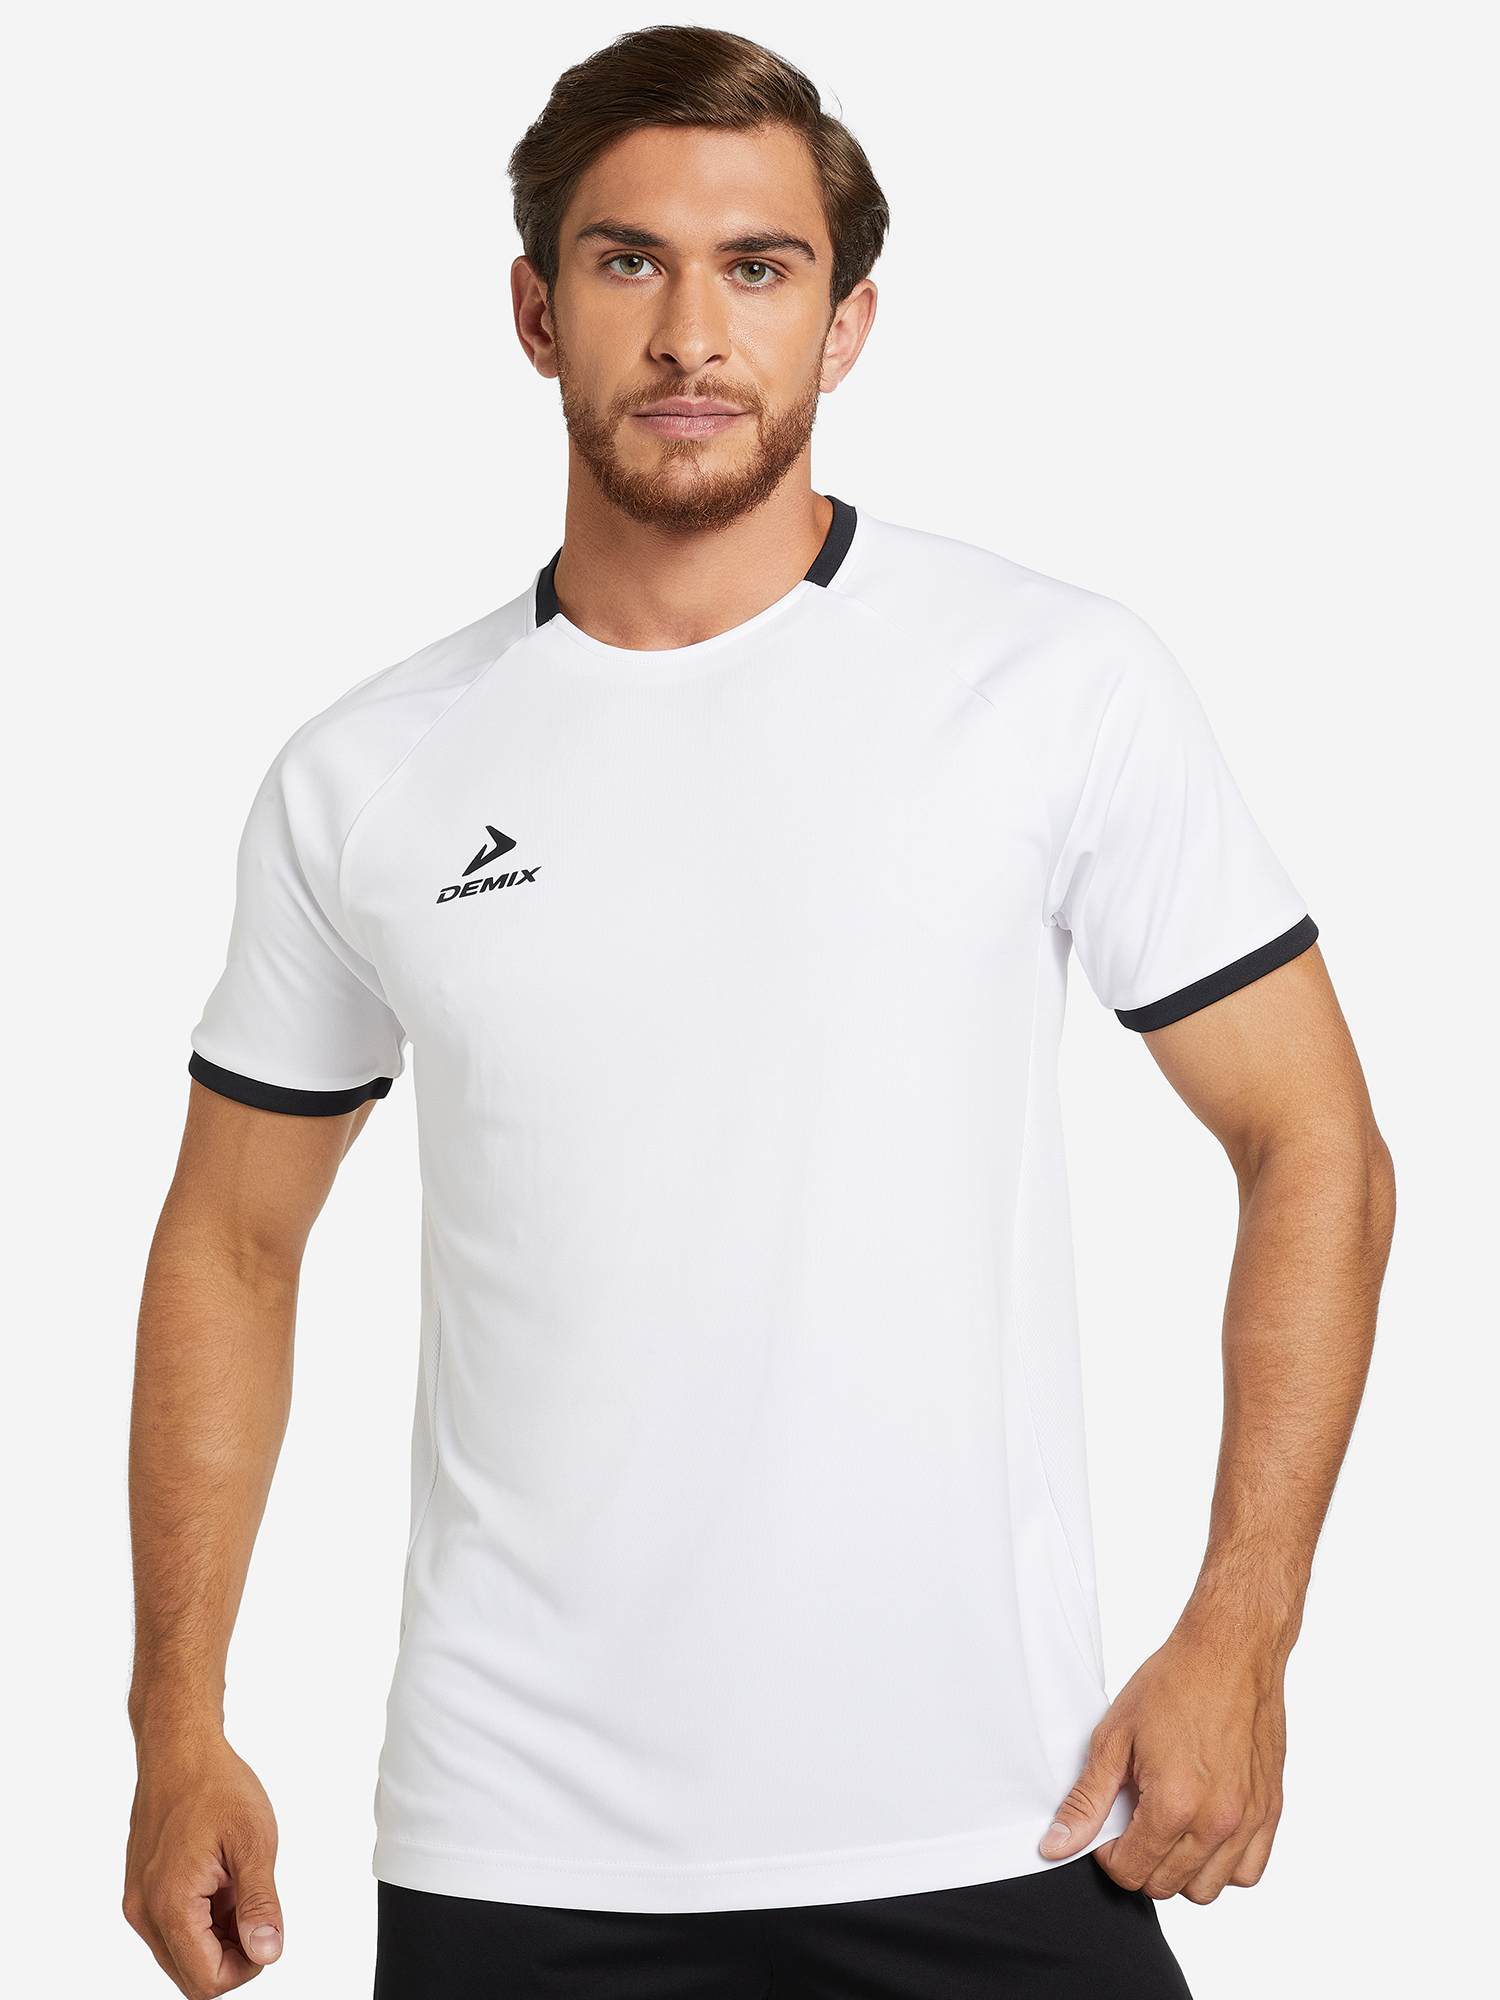 Футболка мужская Demix Division, Белый футболка мужская demix matchday белый